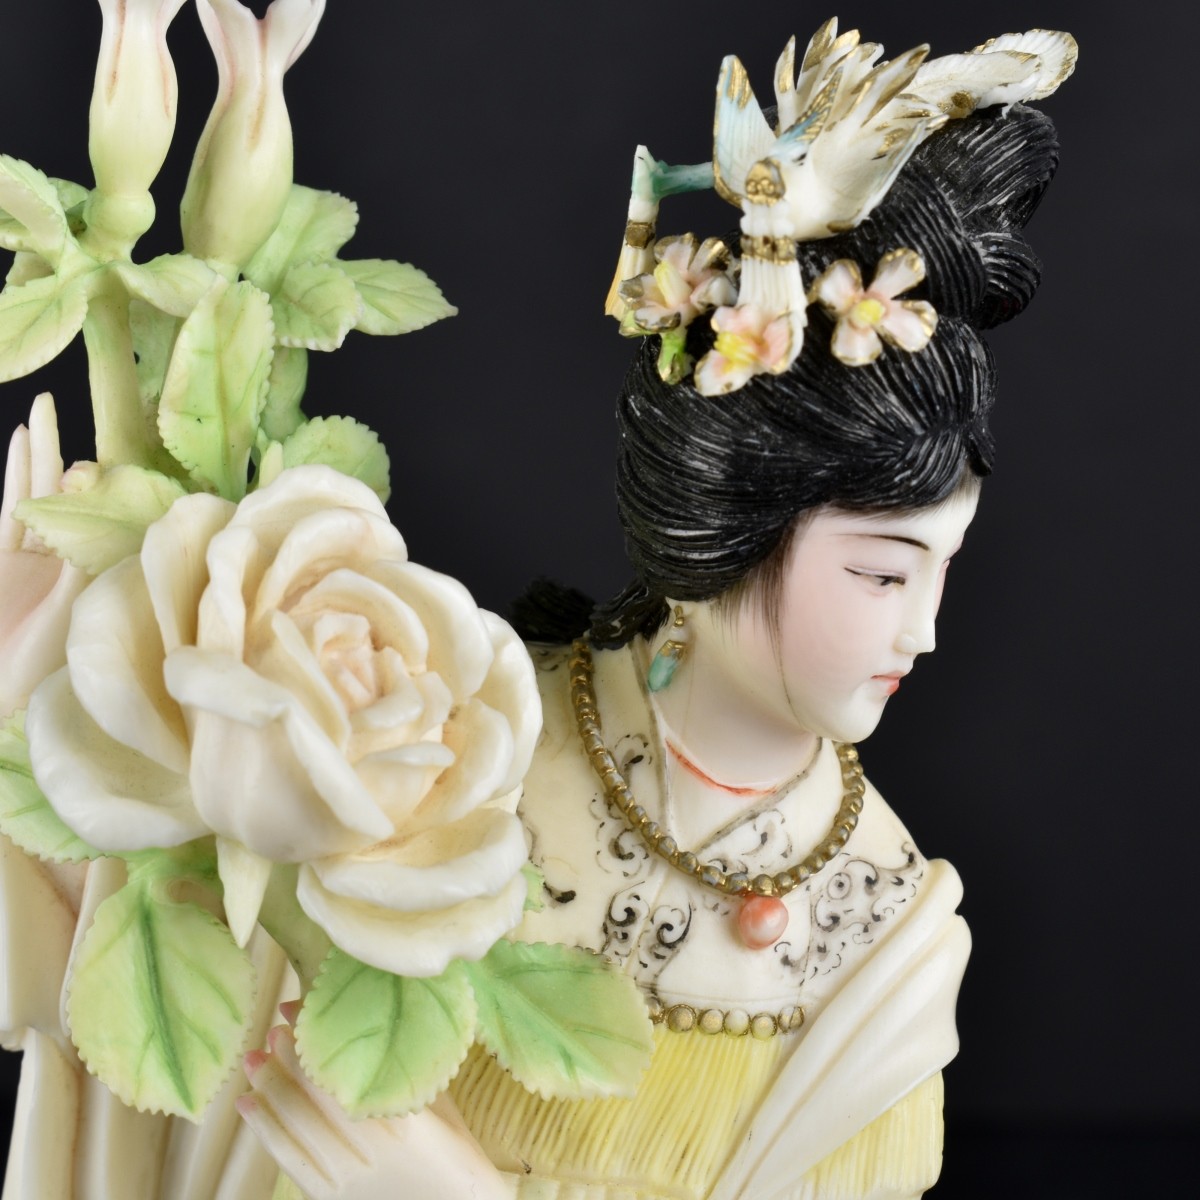 Antique Chinese Polychrome Carved Geisha Figurine